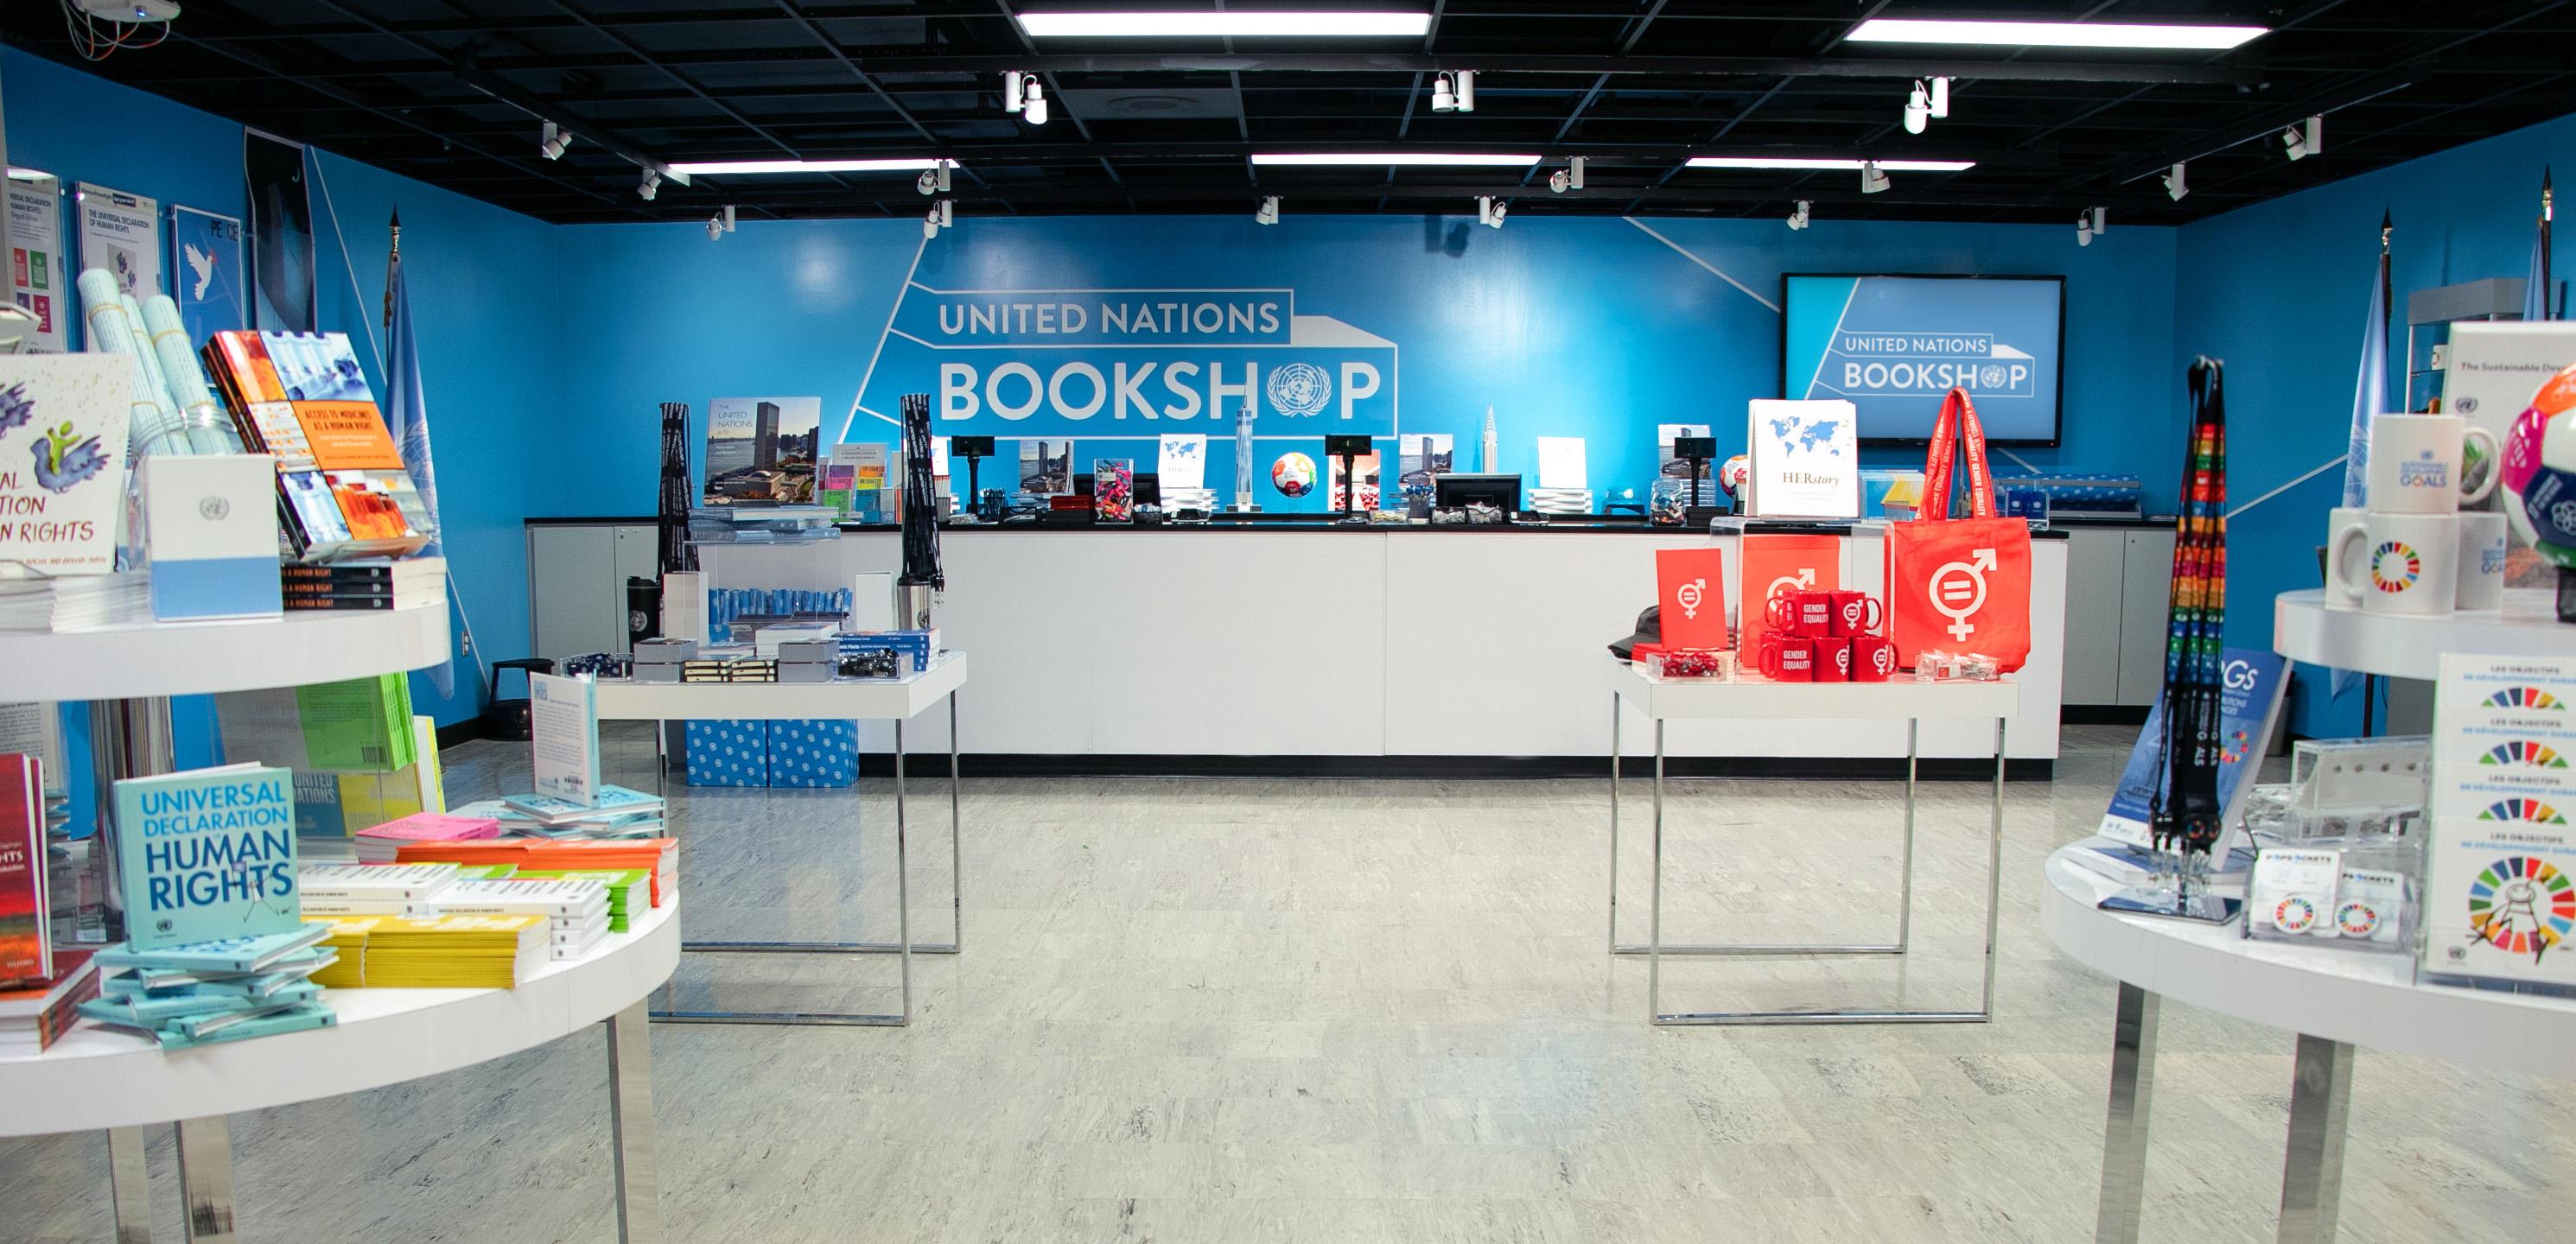 UN Bookshop New York